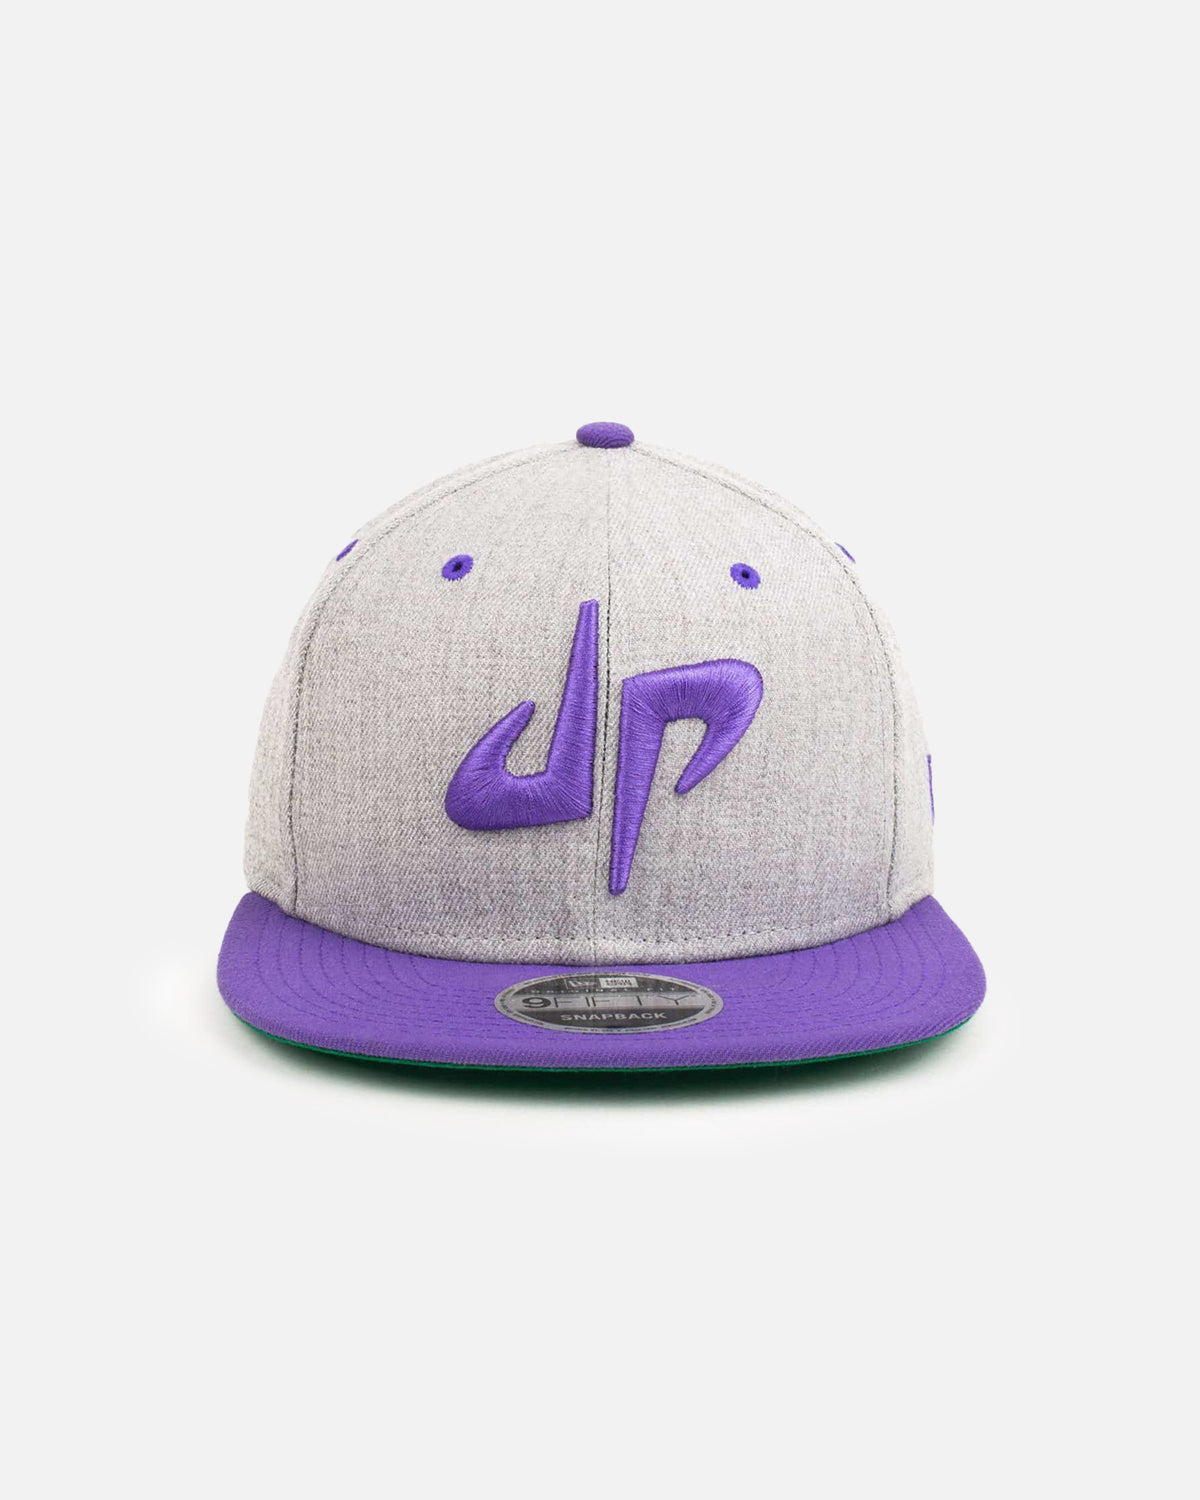 DP x New Era 9Fifty Snapback (Grey/Purple)